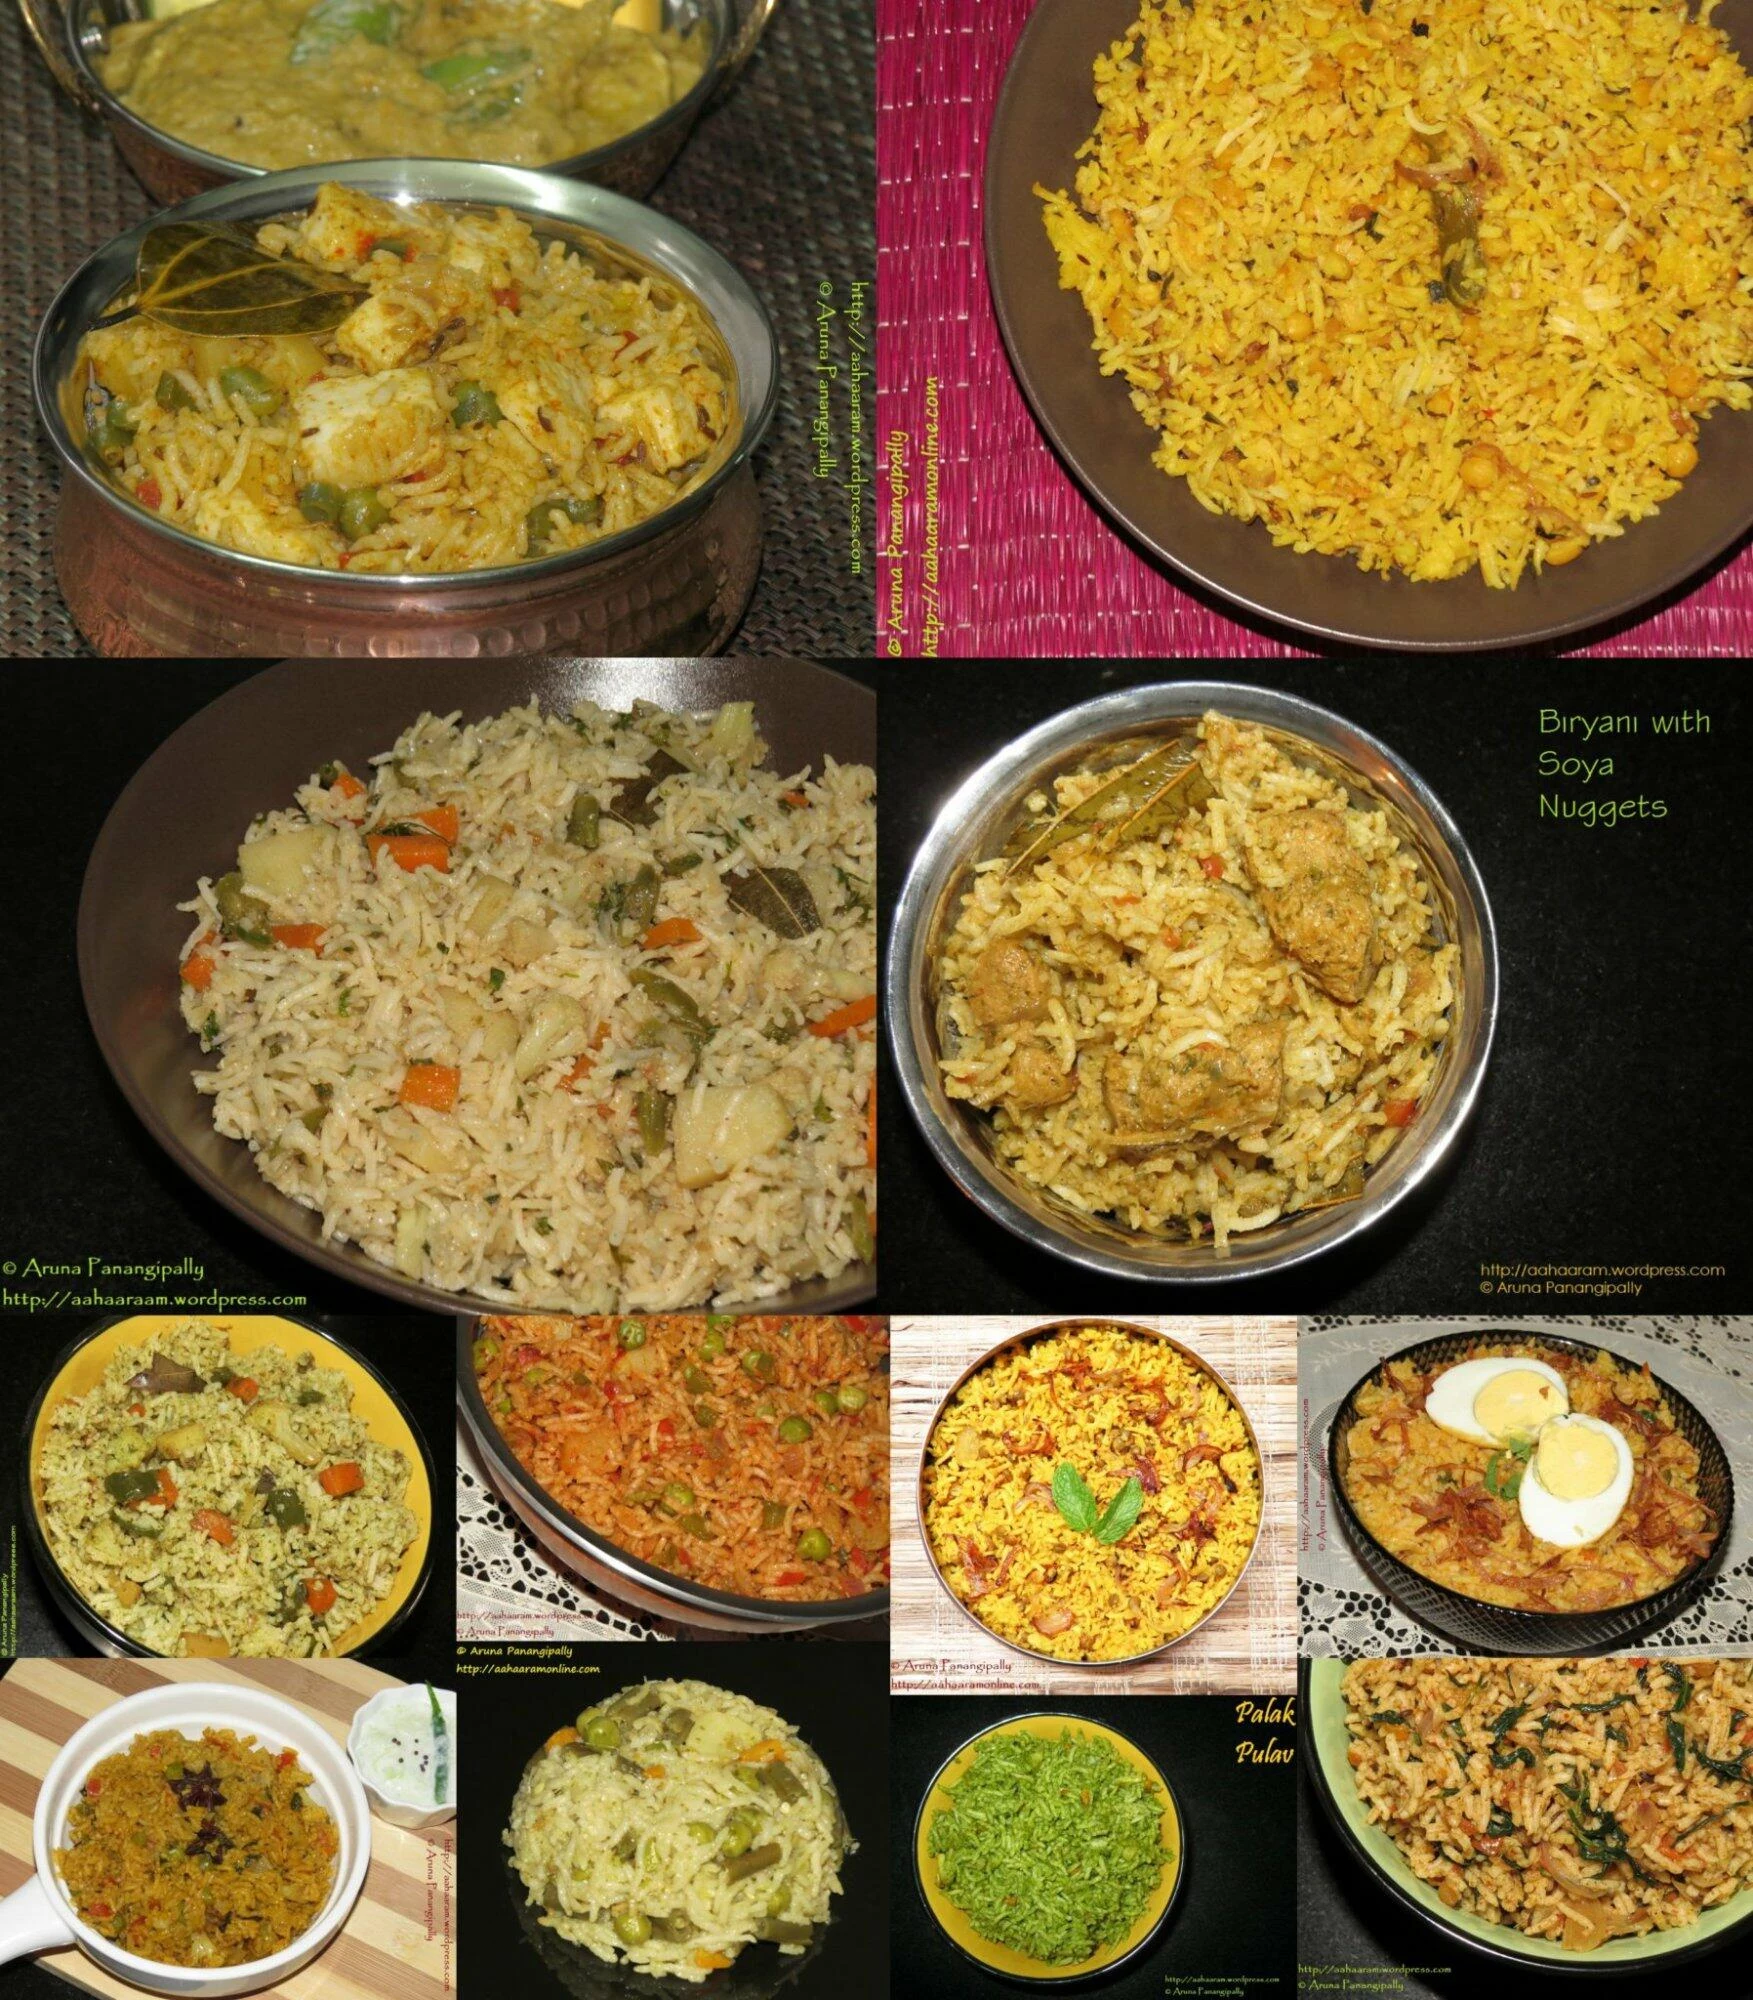 A collection of recipes for vegetarian biryanis and pualos for Ramzan aka Ramadan